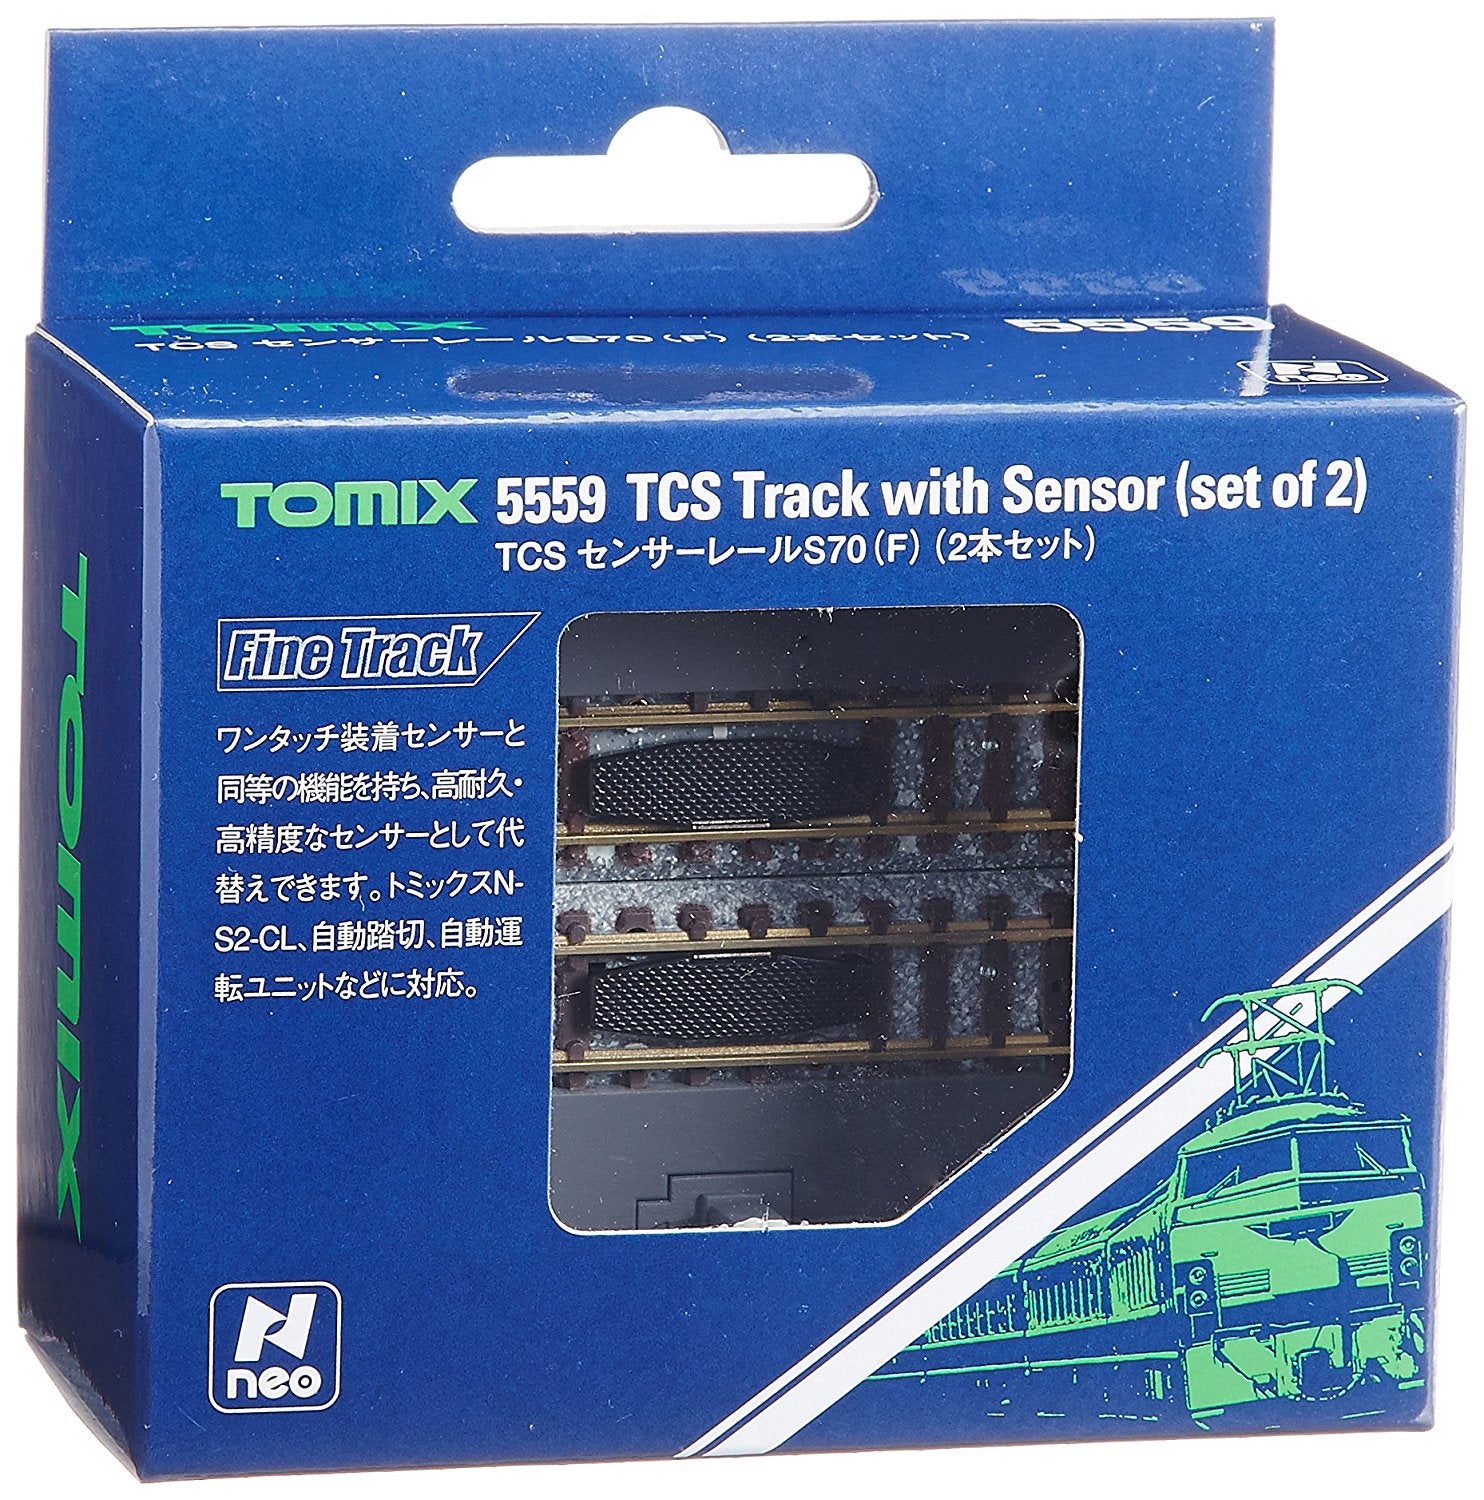 Fine Track TCS Track with Sensor S70 (F) Set of 2